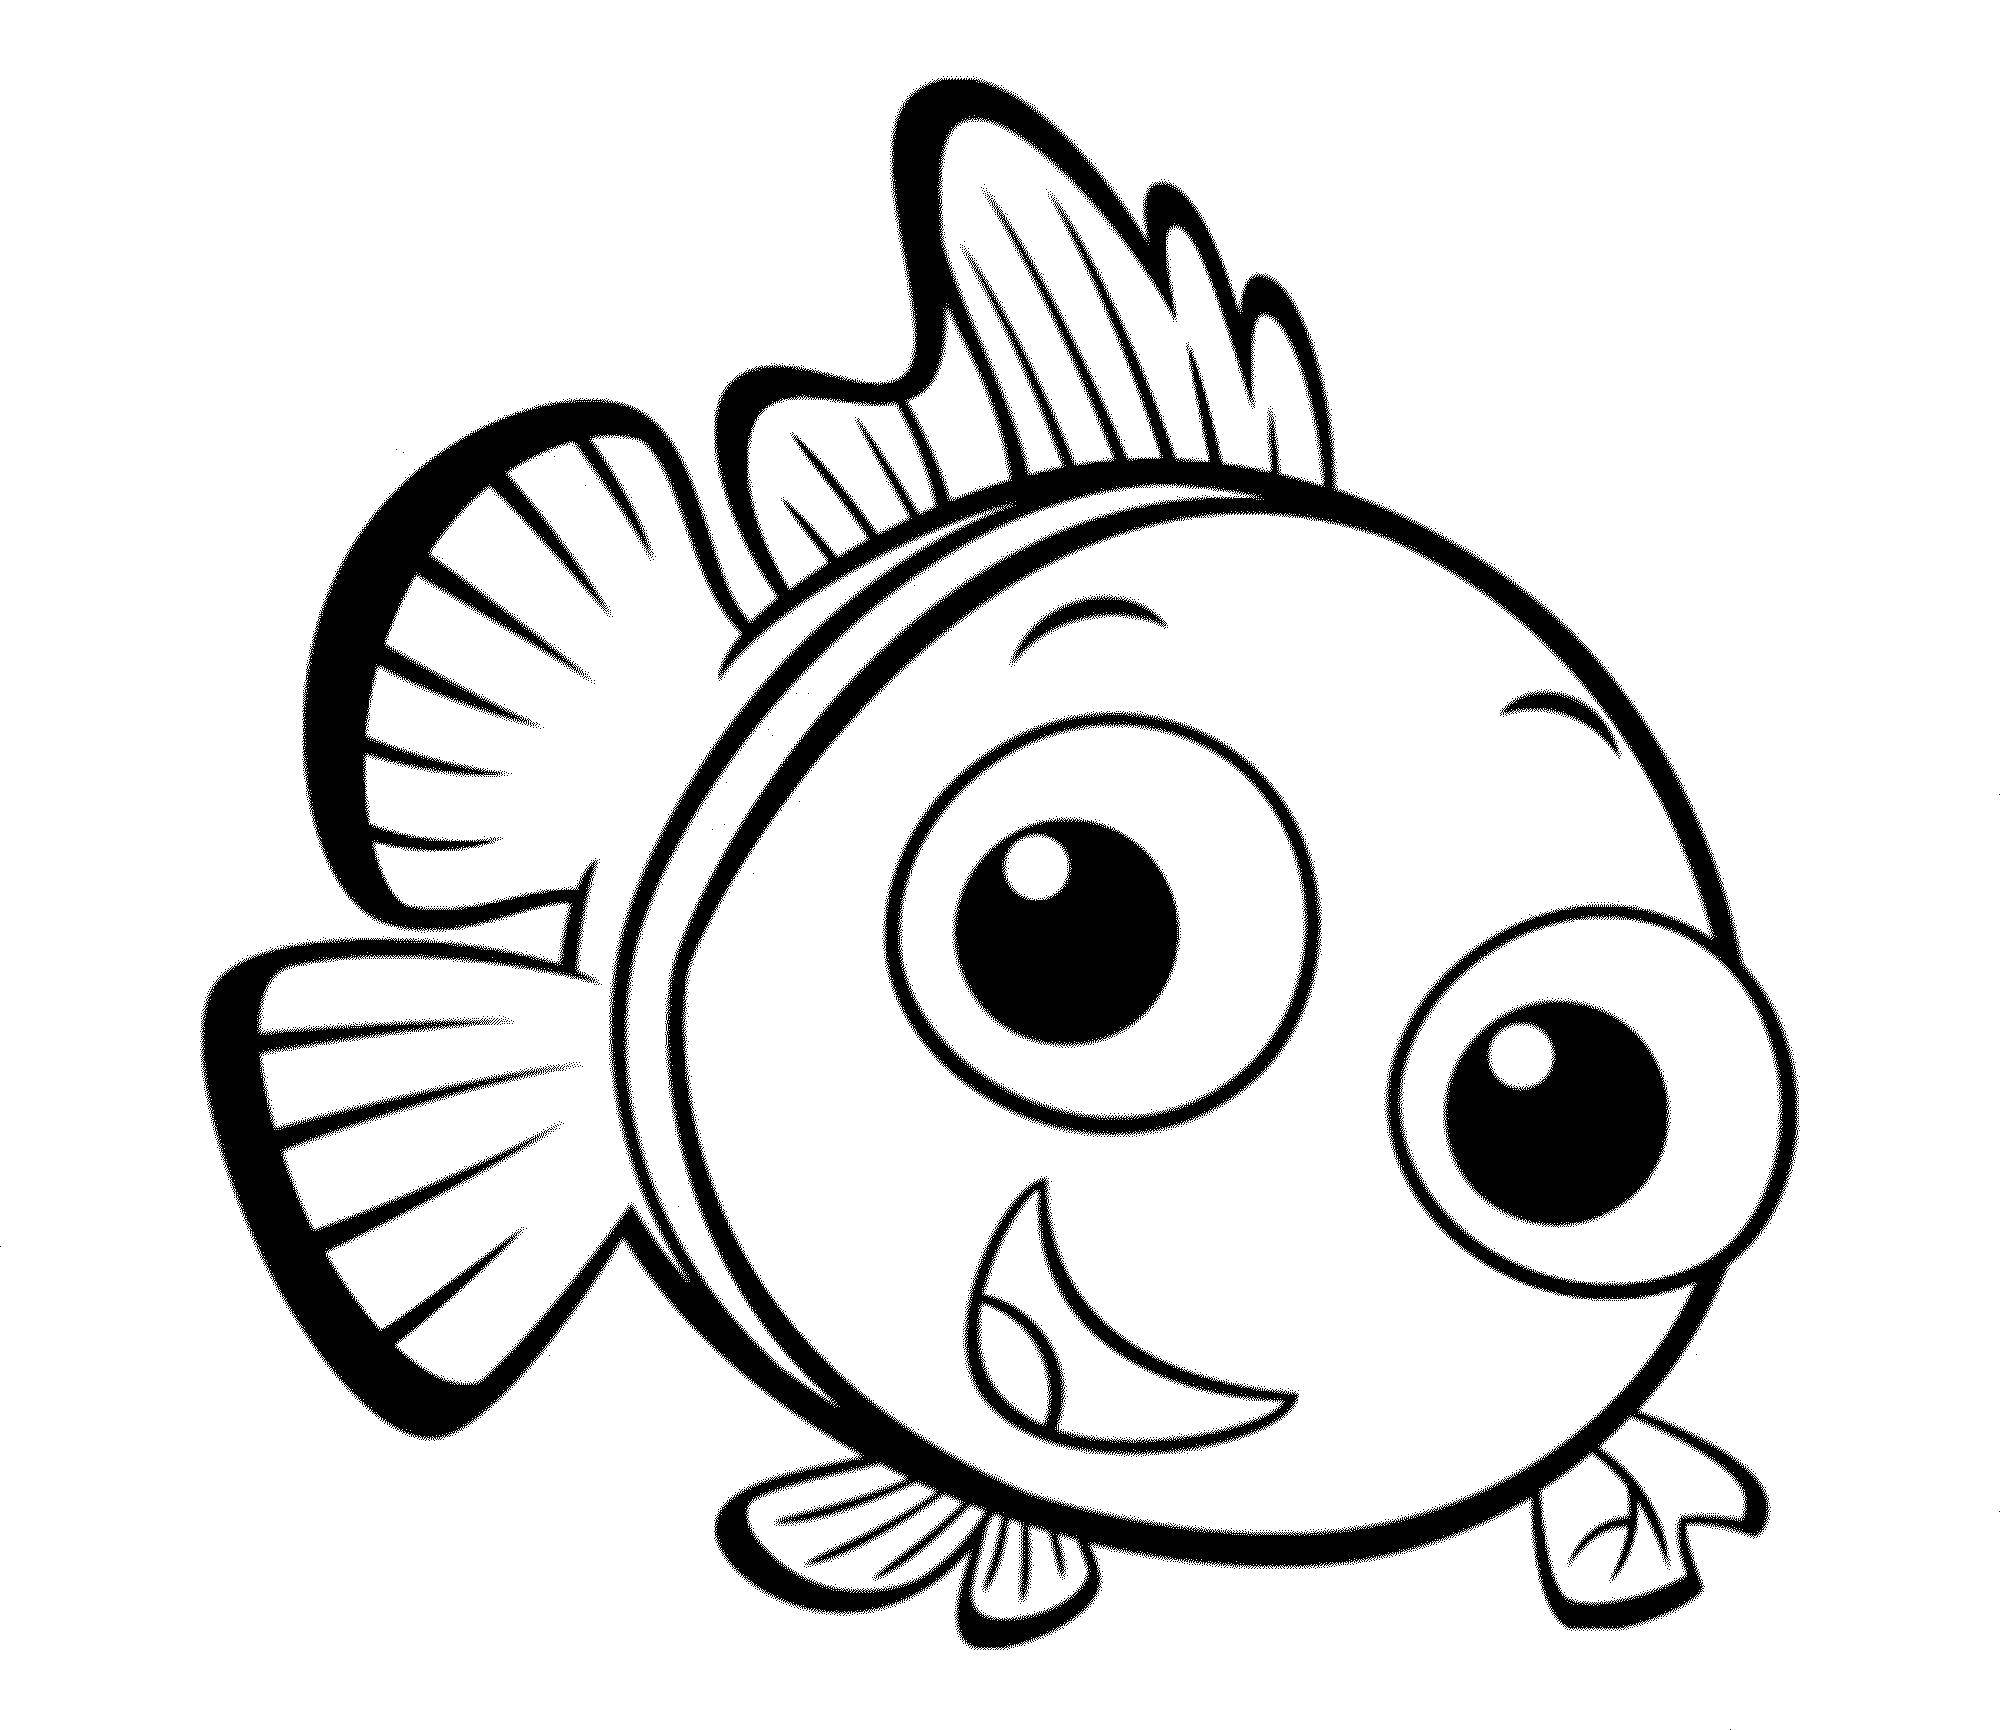 Coloring Happy fish. Category fish. Tags:  fish, eyes, tail.